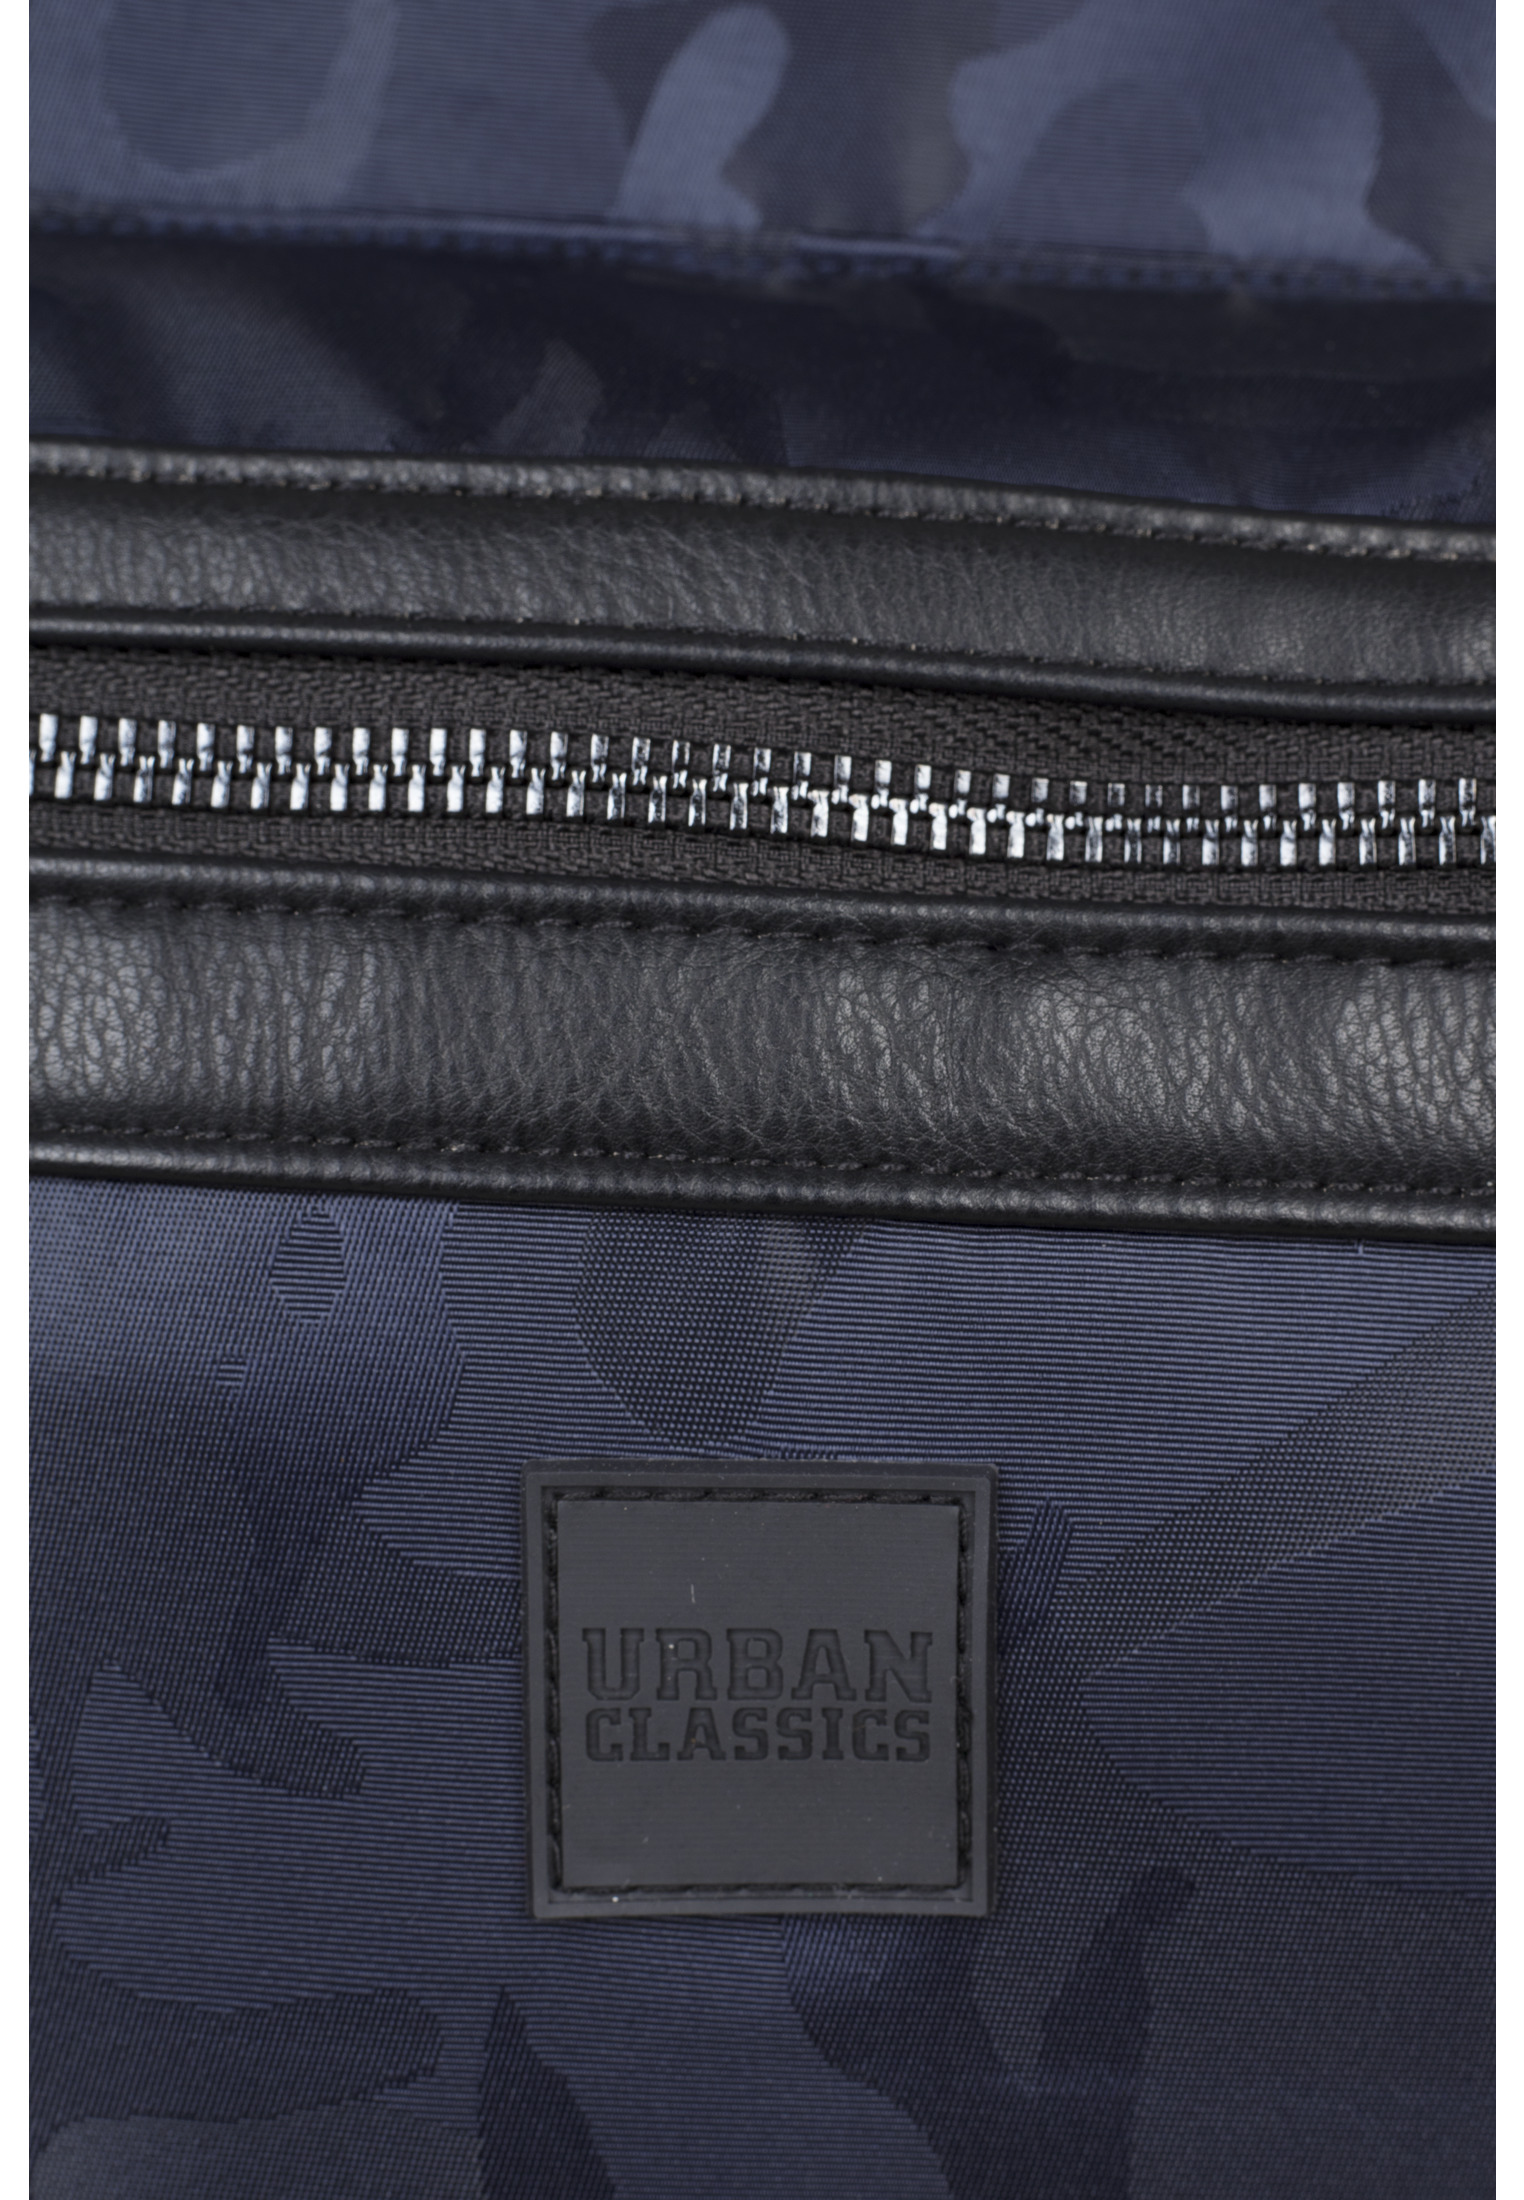 Taschen Camo Jacquard Backpack in Farbe navy camo